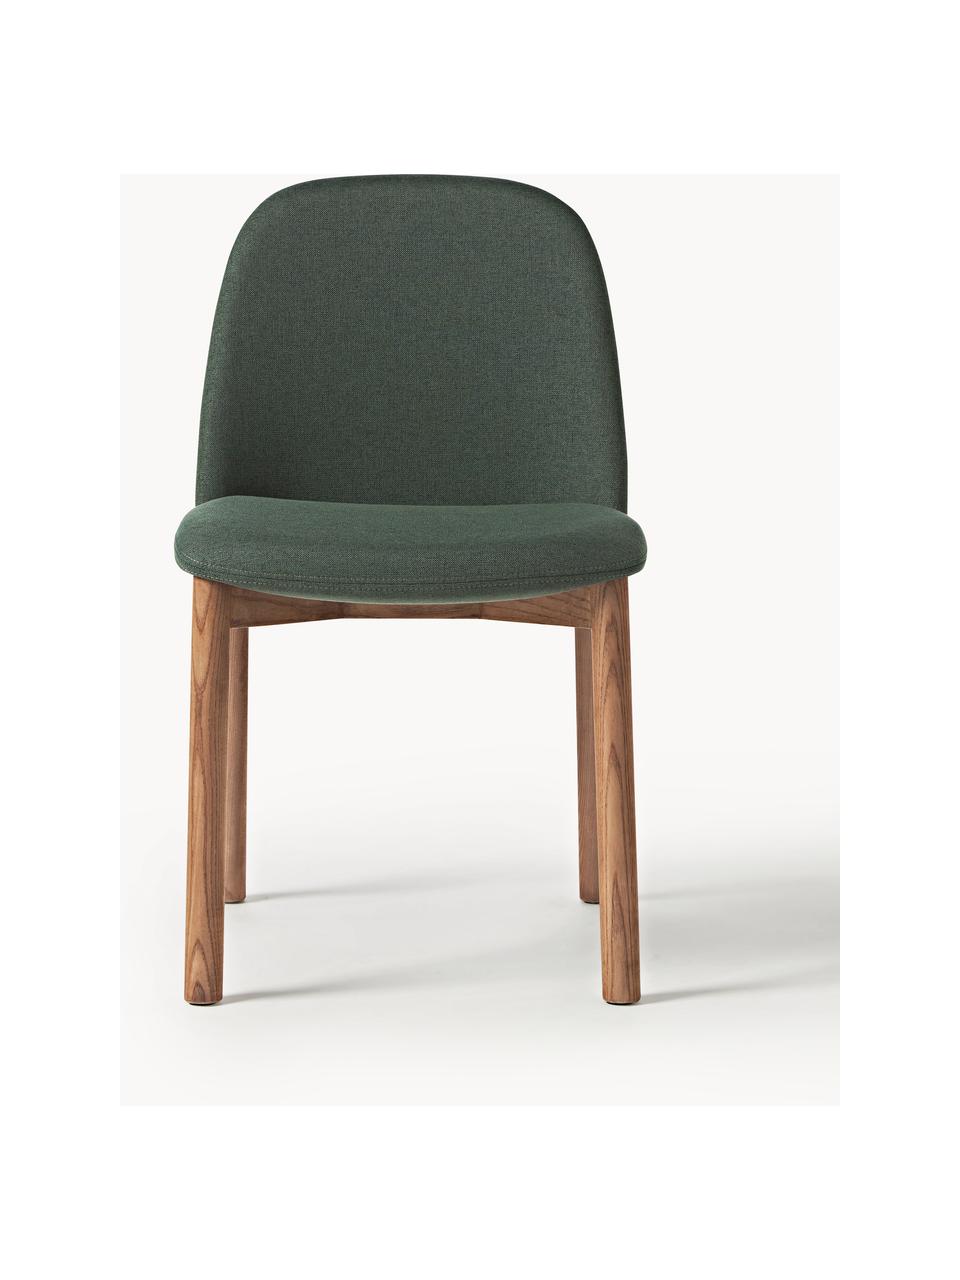 Čalúnená stolička z jaseňového dreva Julie, Tmavozelená, tmavé jaseňové drevo, Š 47 x V 81 cm